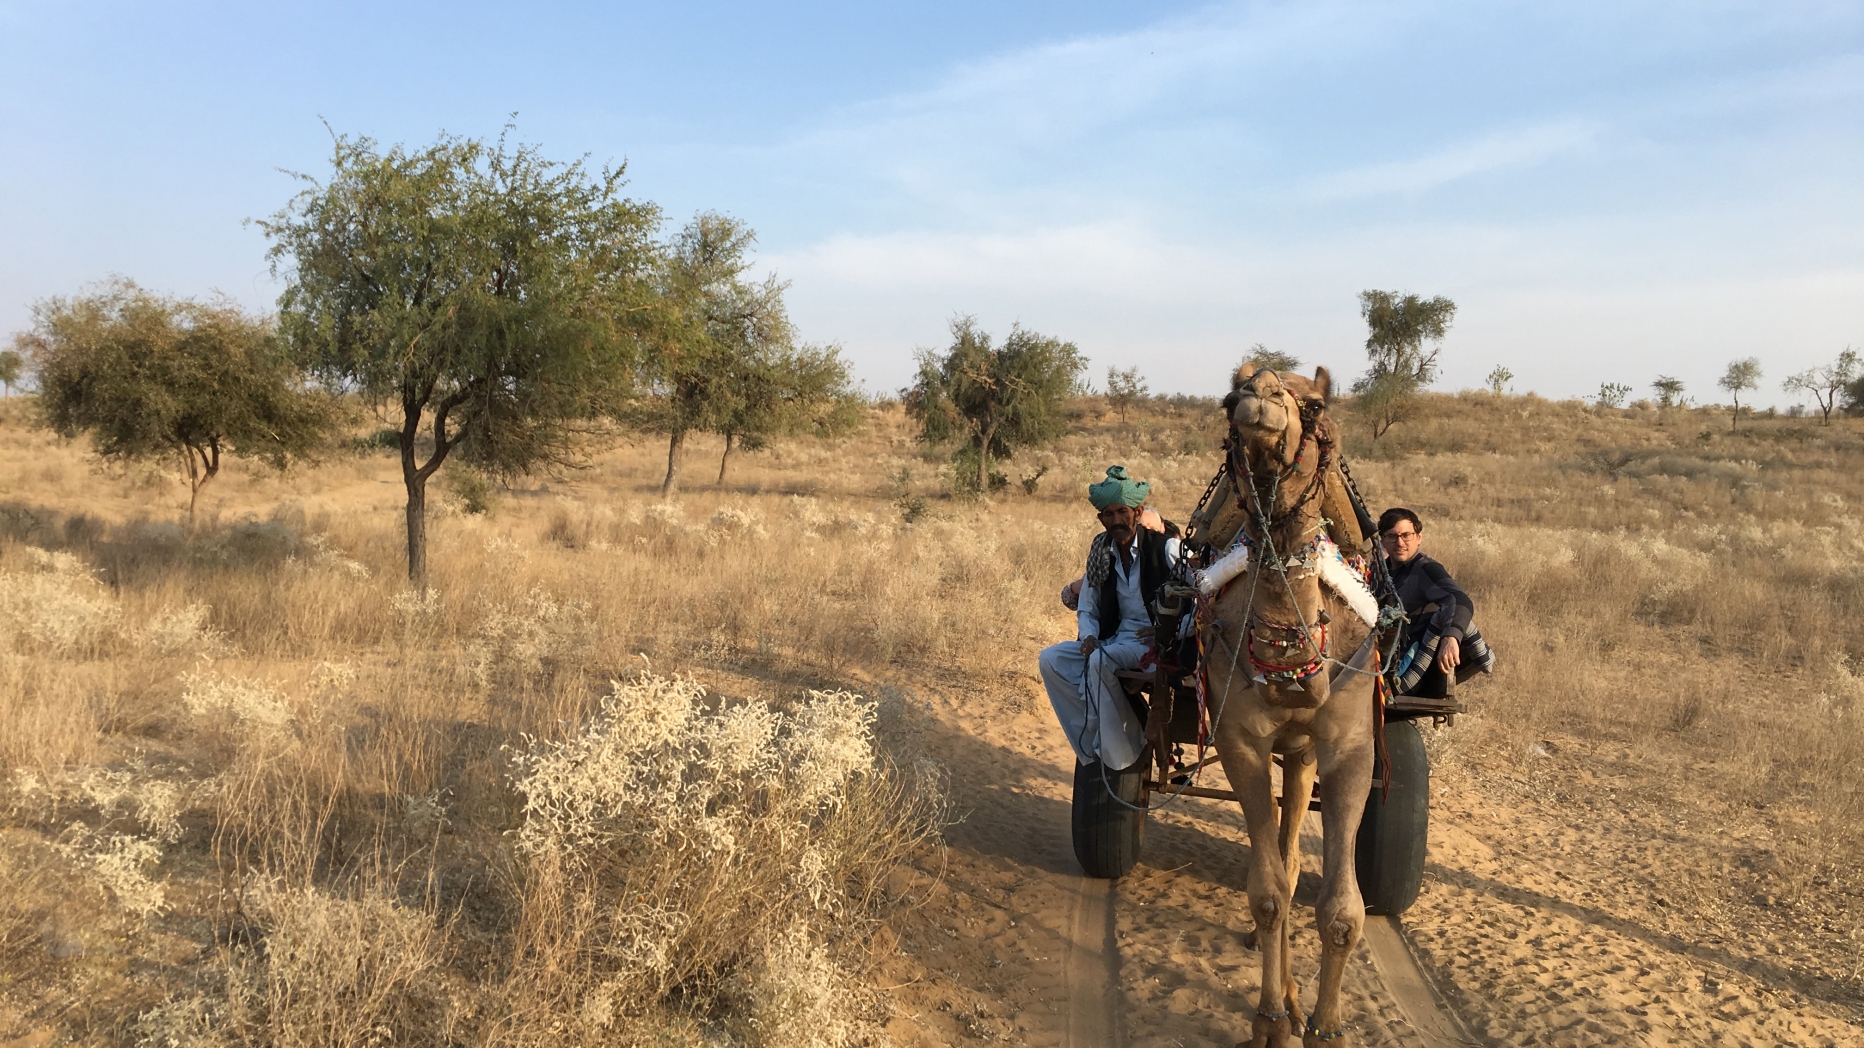 Camel towing people behind